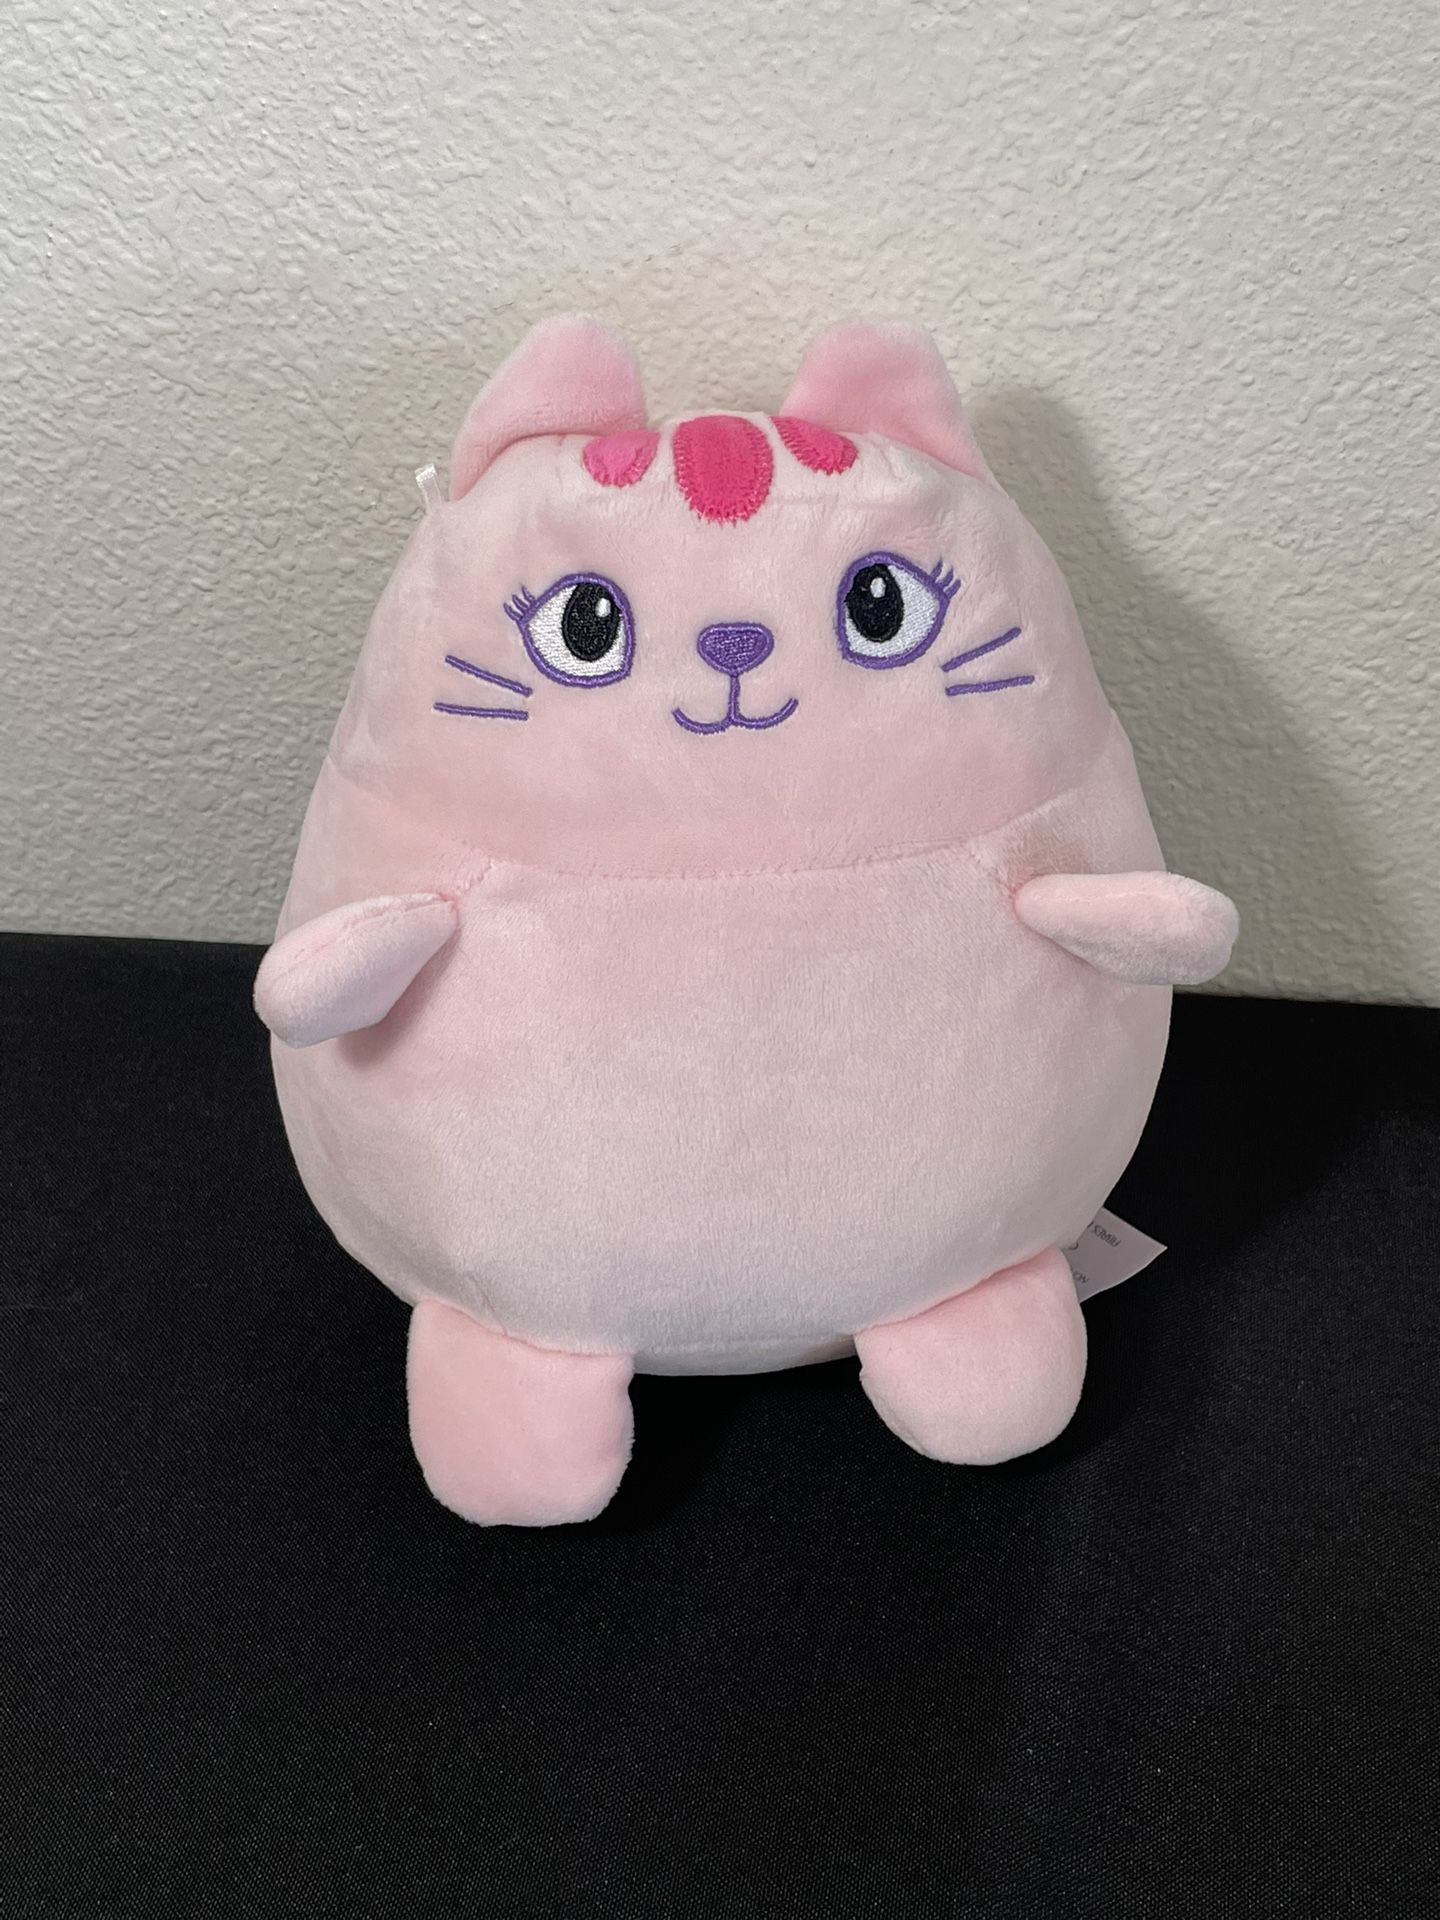 2020 Animal Adventures Soft Plush Pink Cat Plush Toy